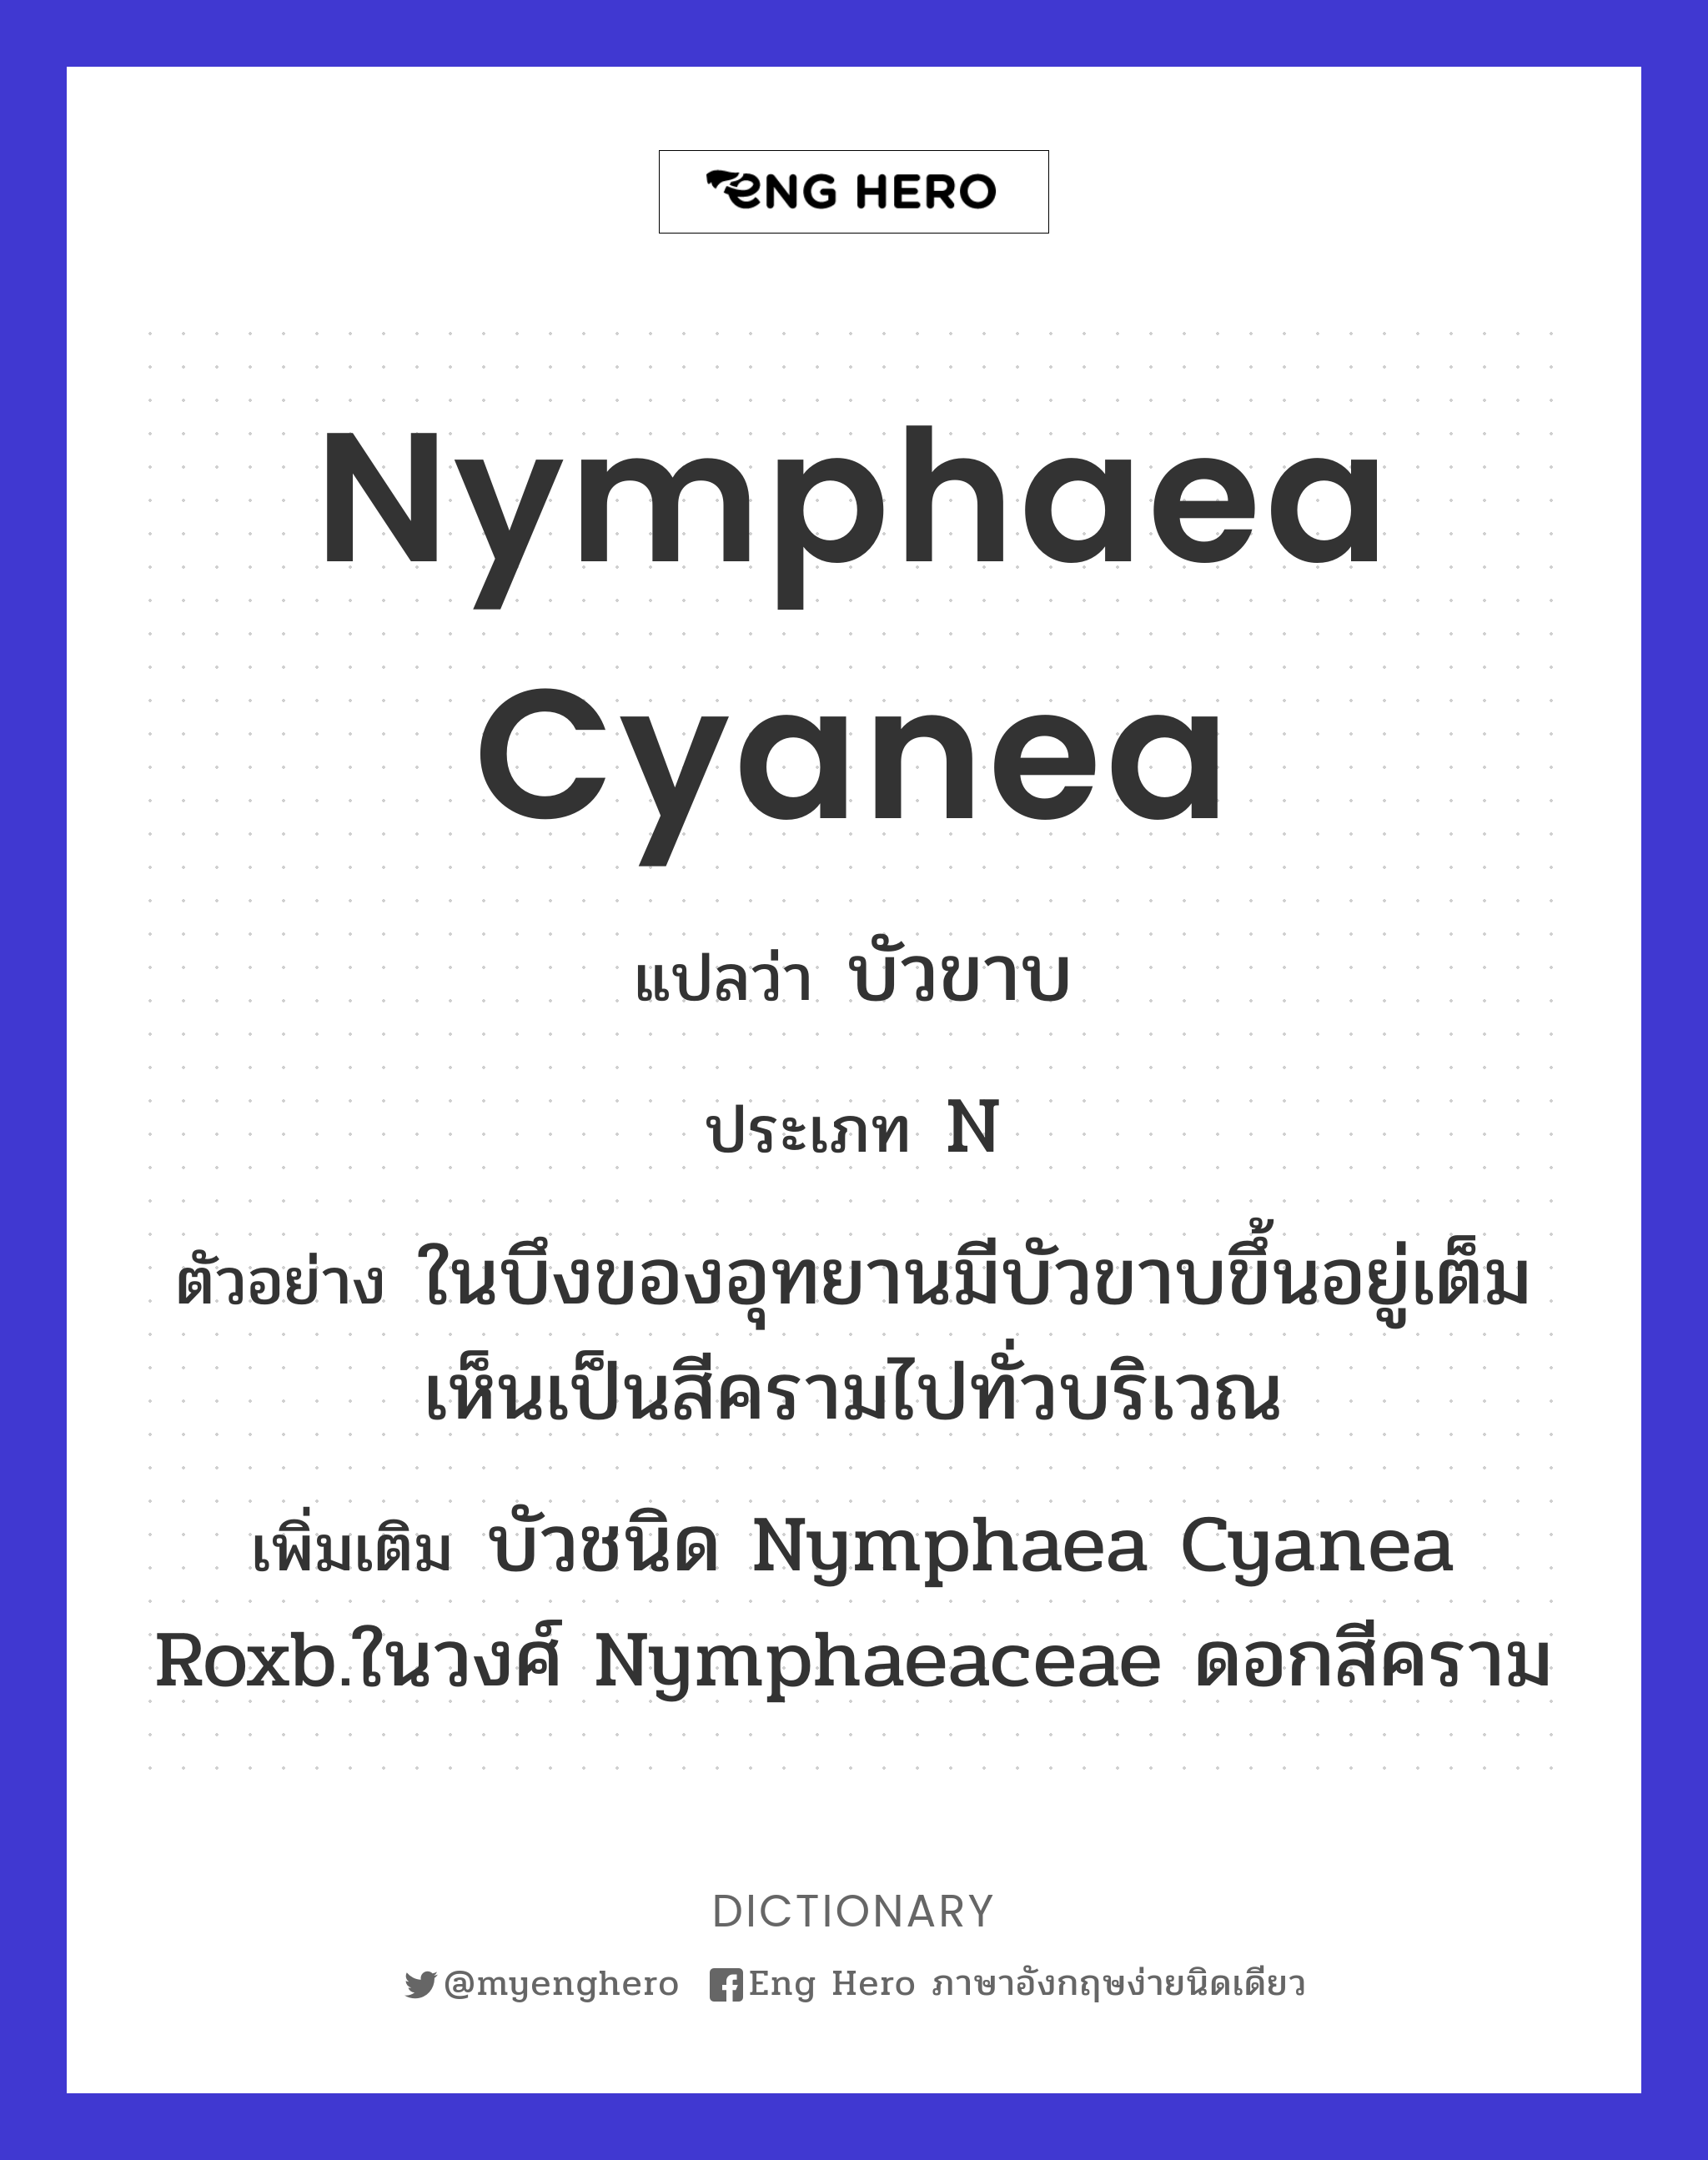 Nymphaea cyanea